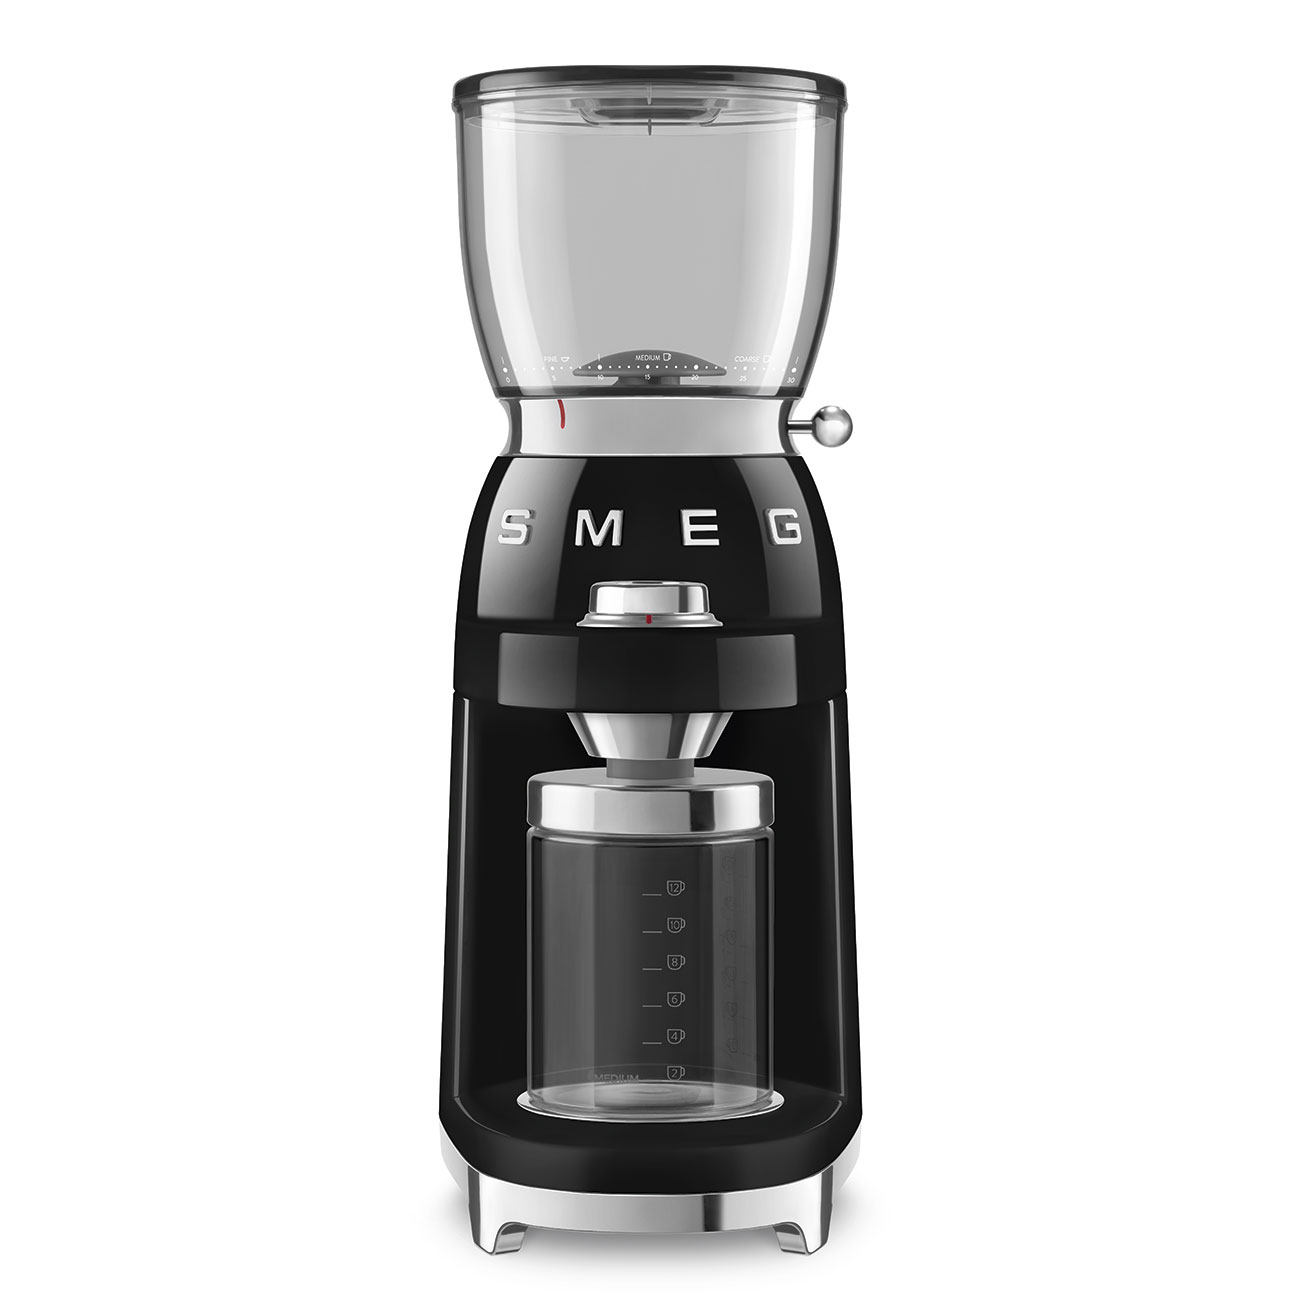 Black Coffee Grinder featuring a conical burr - CGF11BLUK - Smeg_1